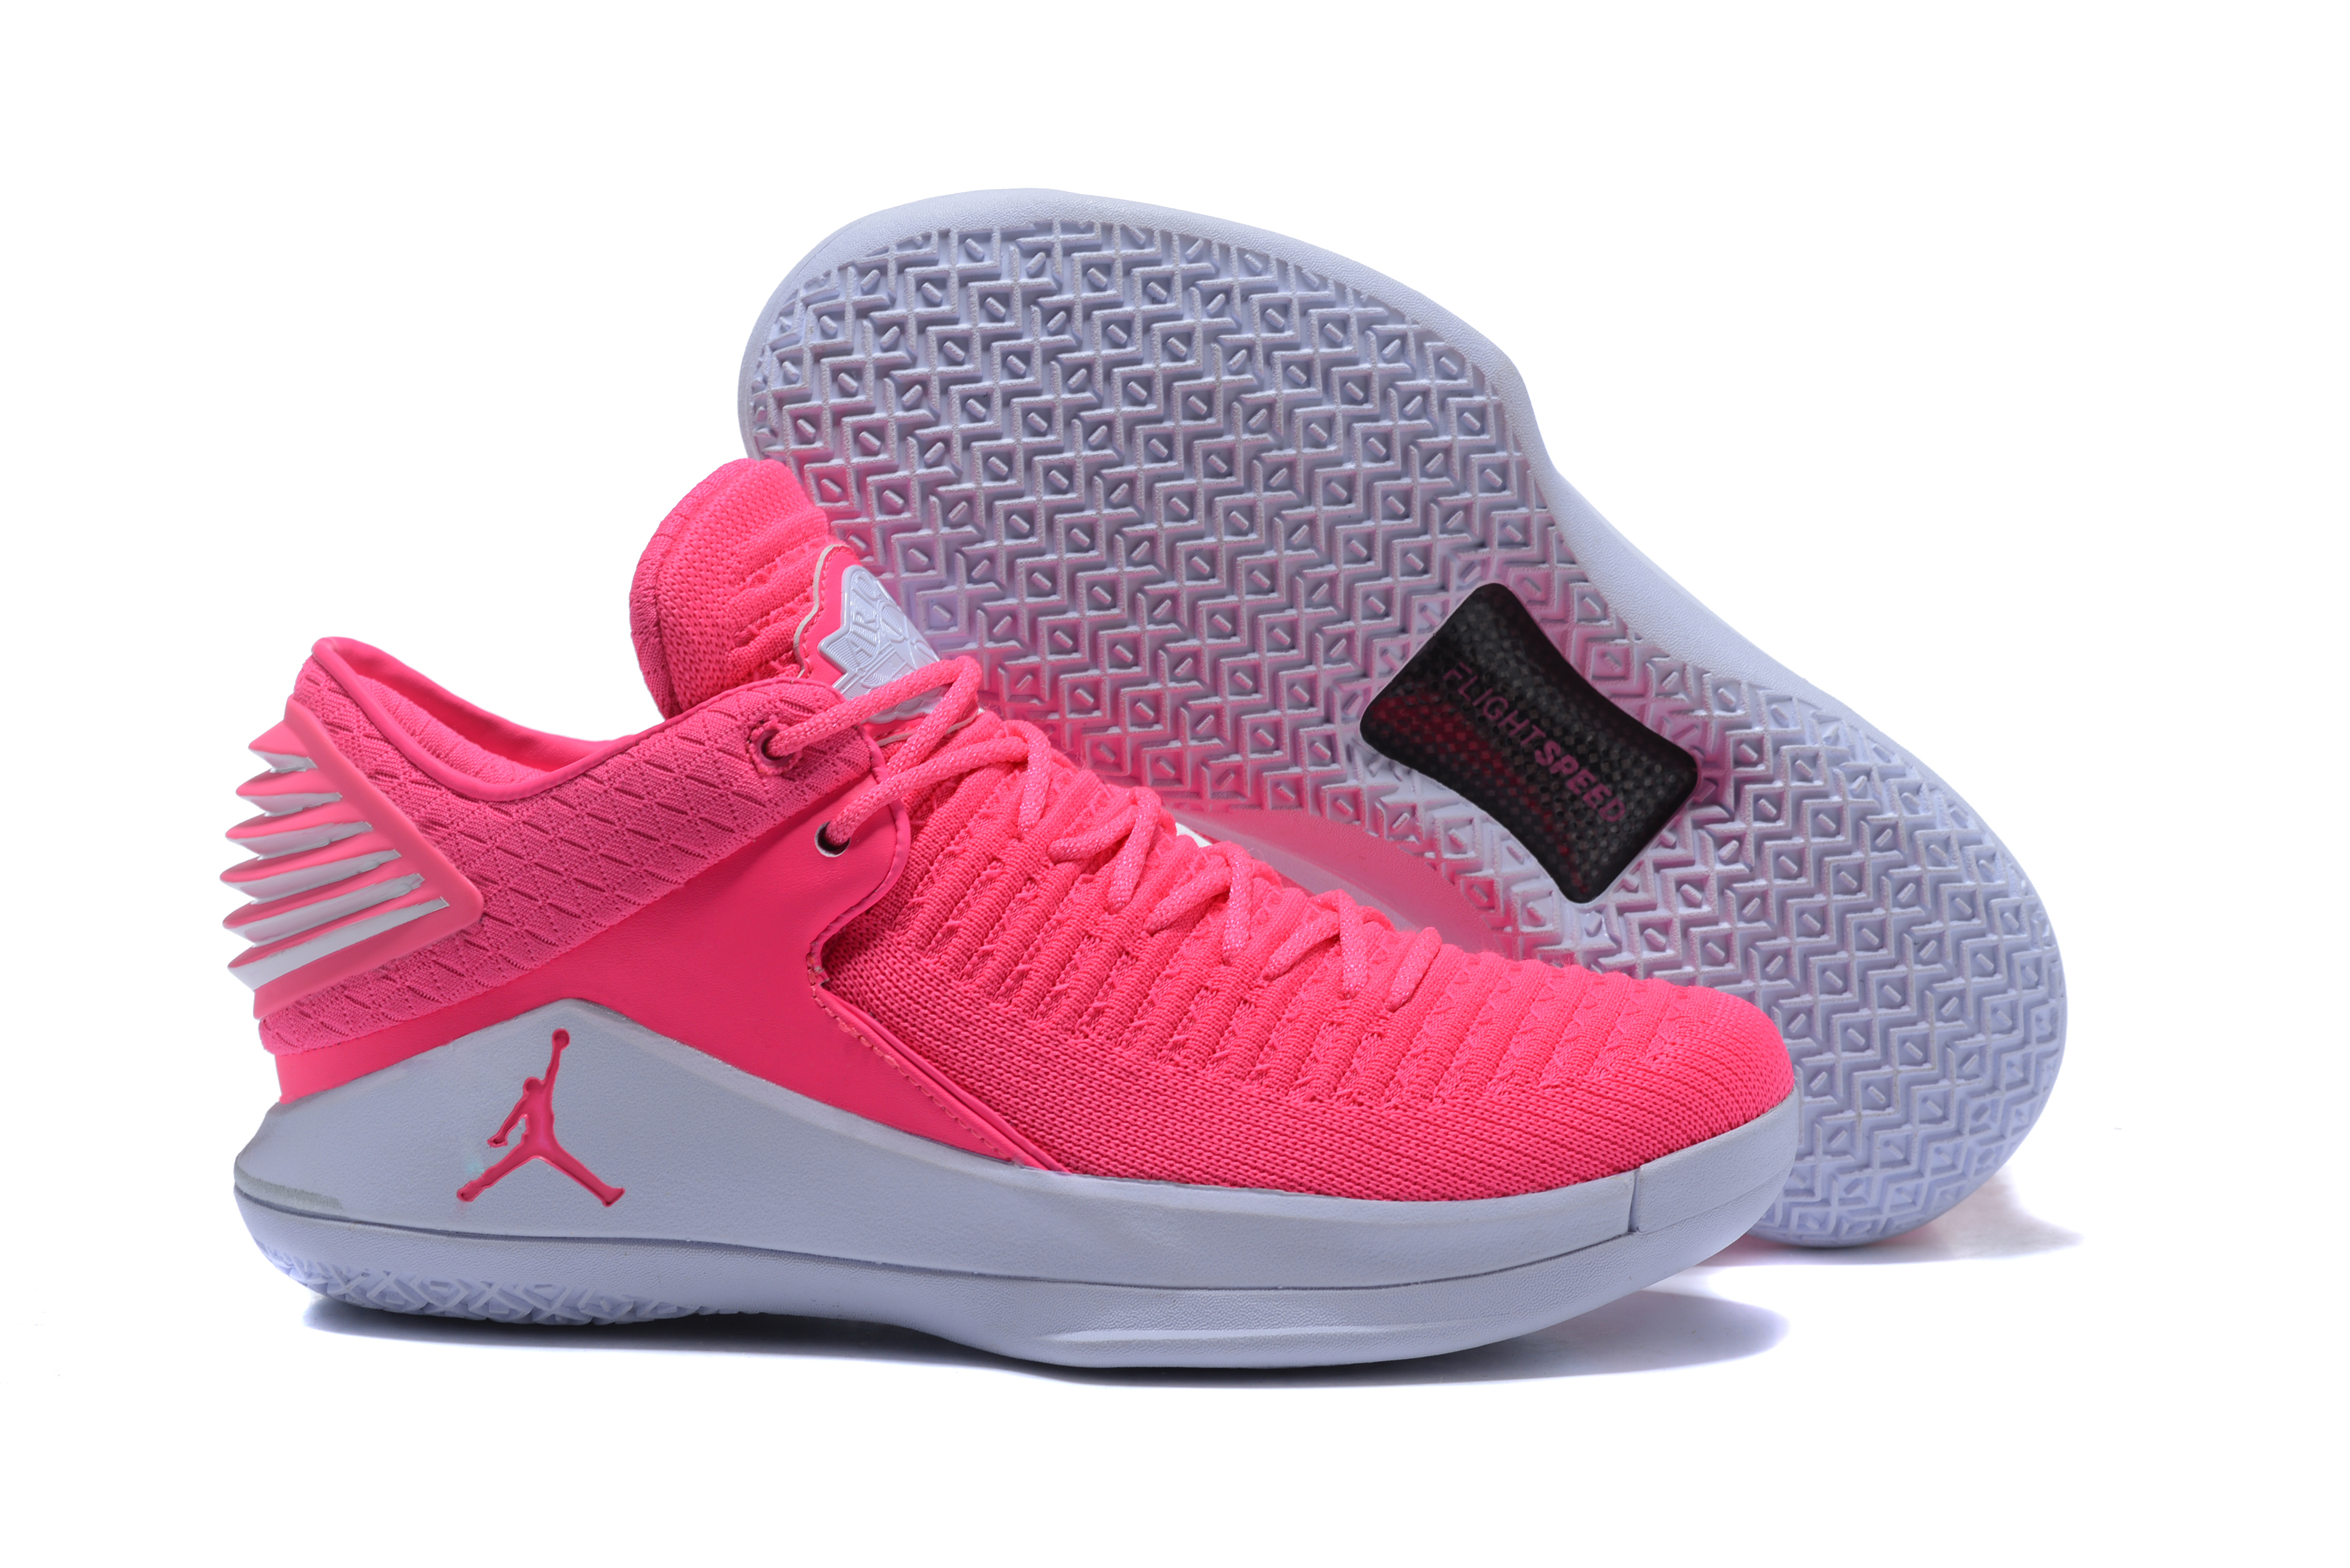 New Air Jordan 32 Low Breast Cancer Pink